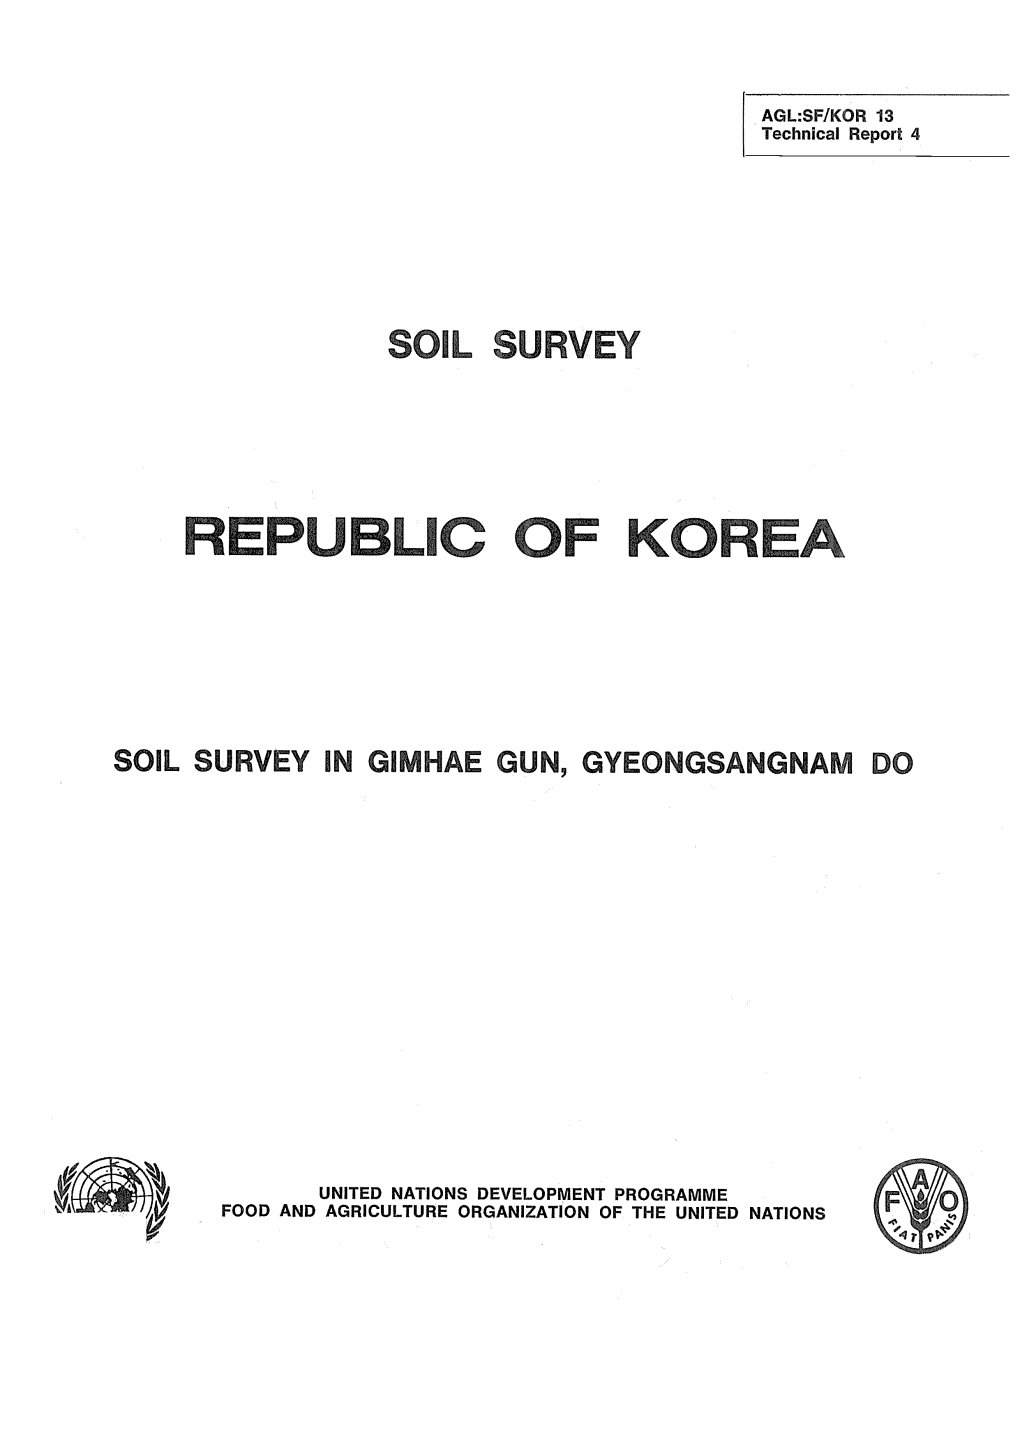 Soil Survey in Gimhae Gun, Gyeongsangnam Do